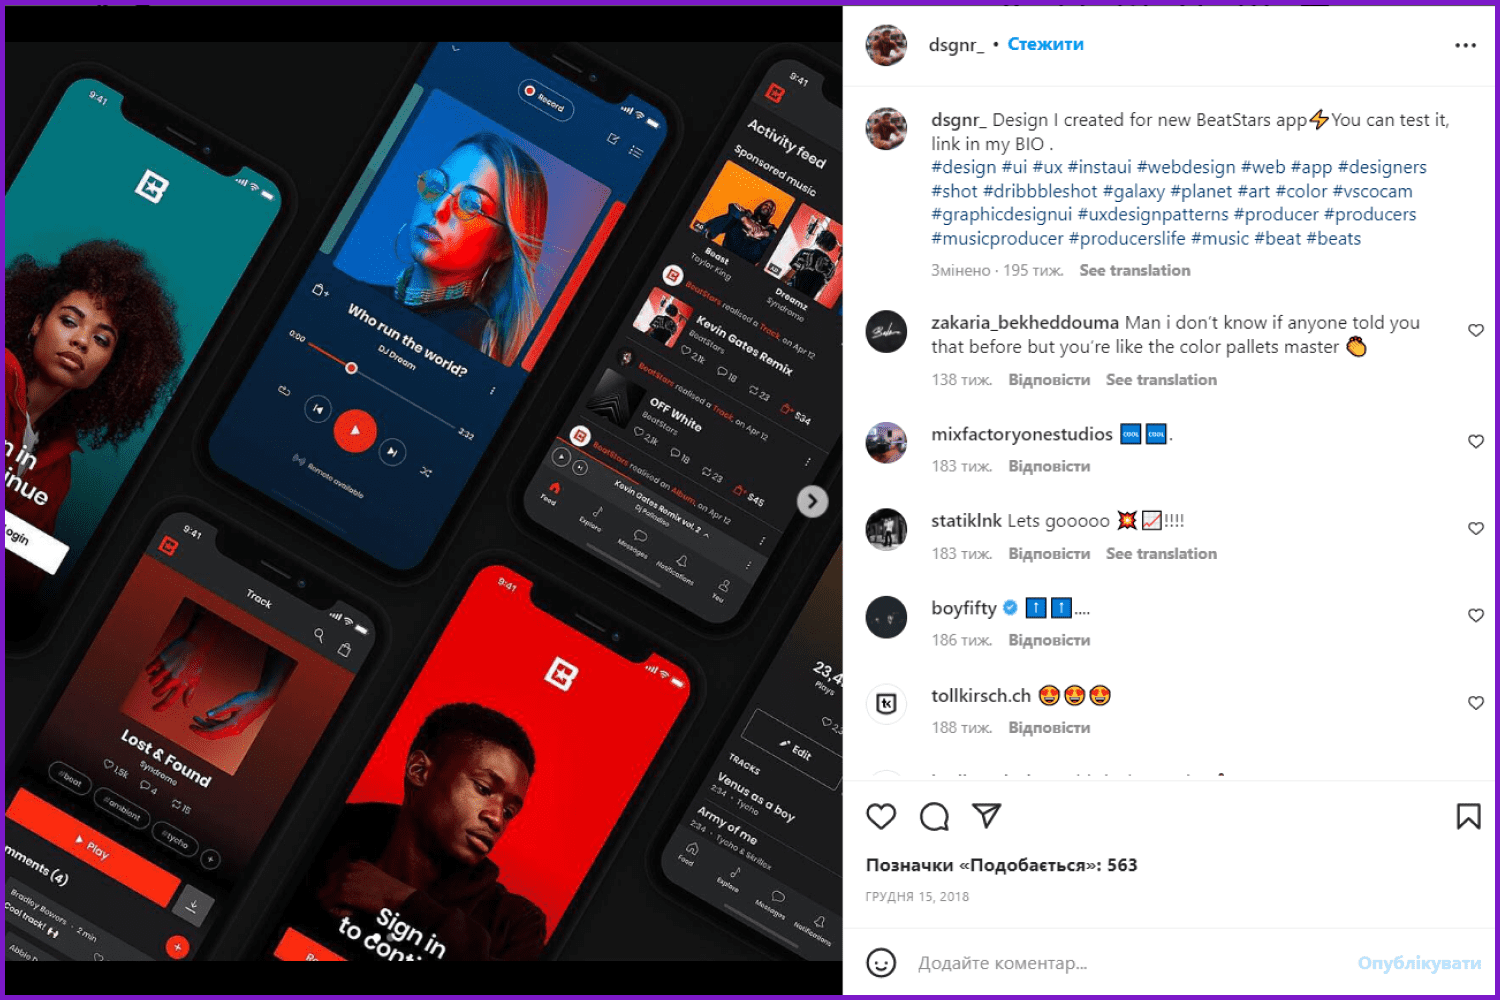 Collage of Instagram account images @dsgnr_.